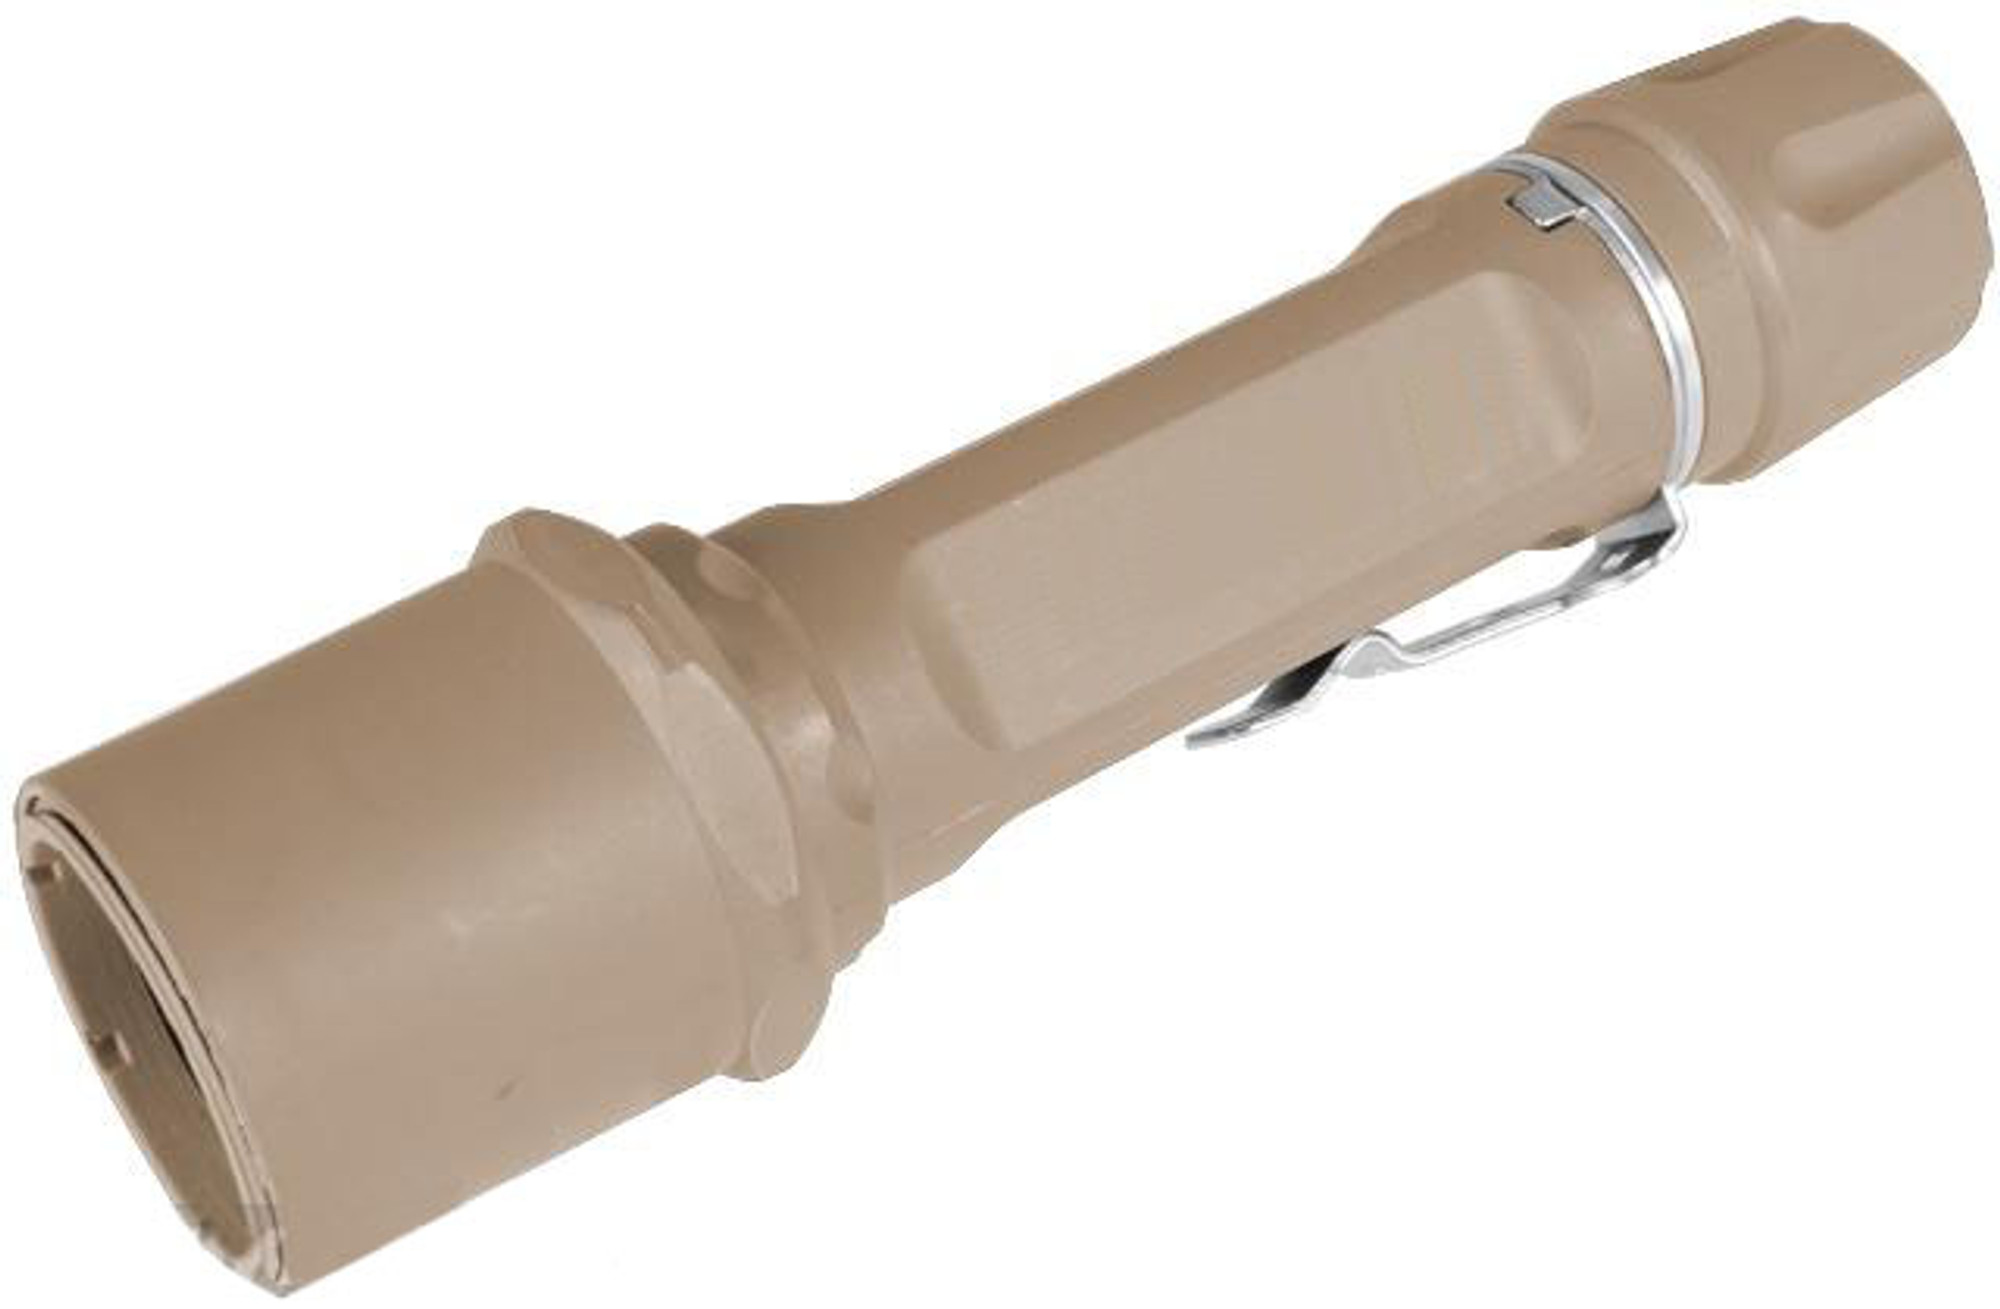 G&P G2 LED 170 Lumen Tactical Personal / Weapon Light (Color: Sand)